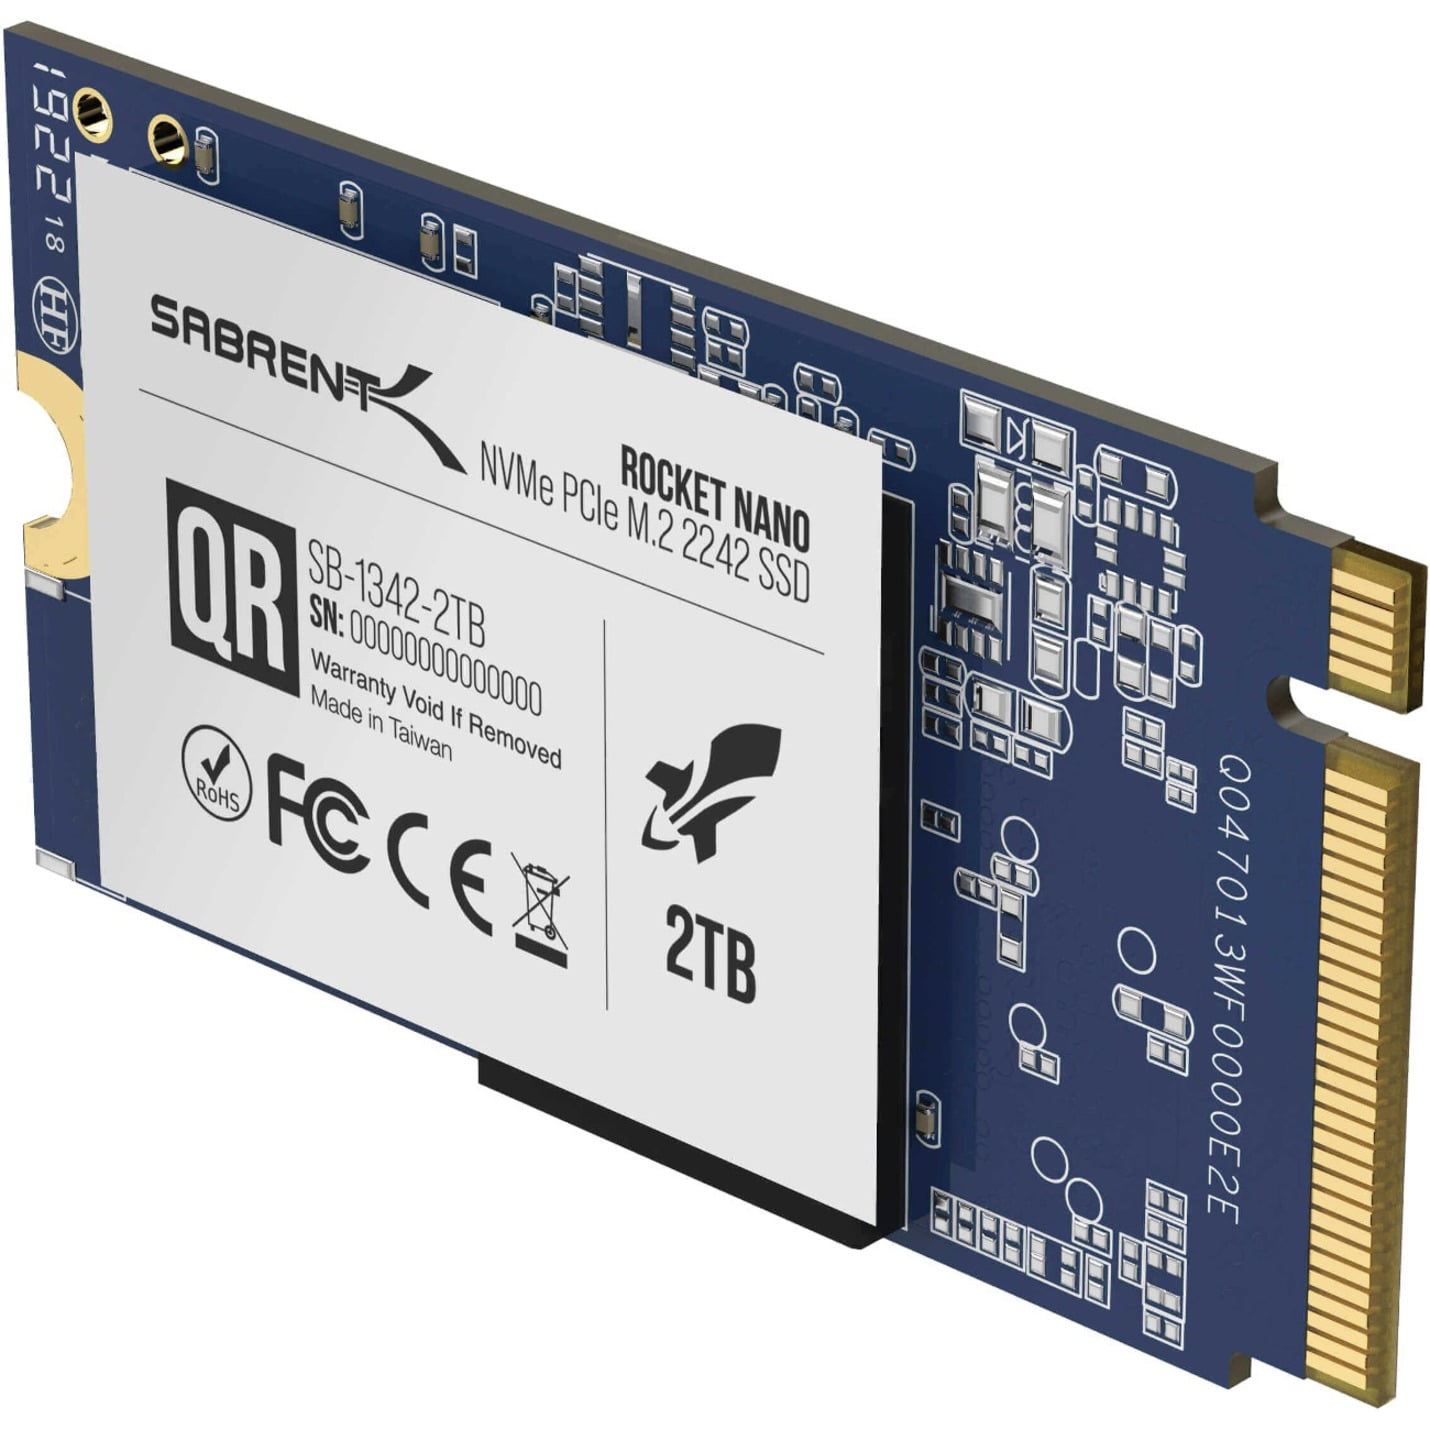 SABRENT SSD 1TB、M.2 SSD 1TB、NVMe 1TB PCIe M.2 2242、内蔵SSD速度